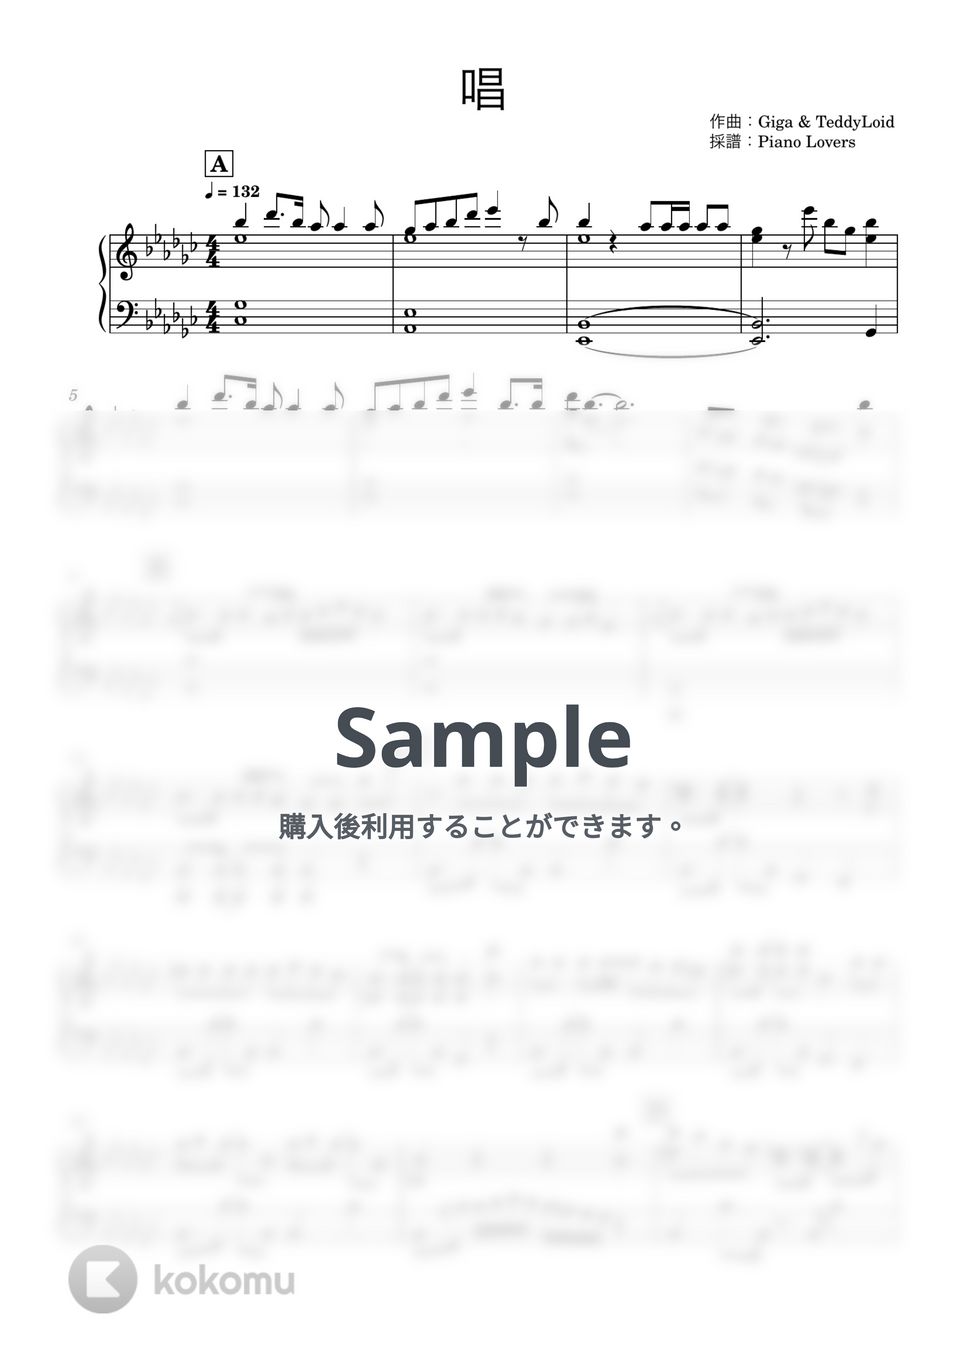 Ado - 唱 / Show (ピアノ楽譜 / 初級) by Piano Lovers. jp